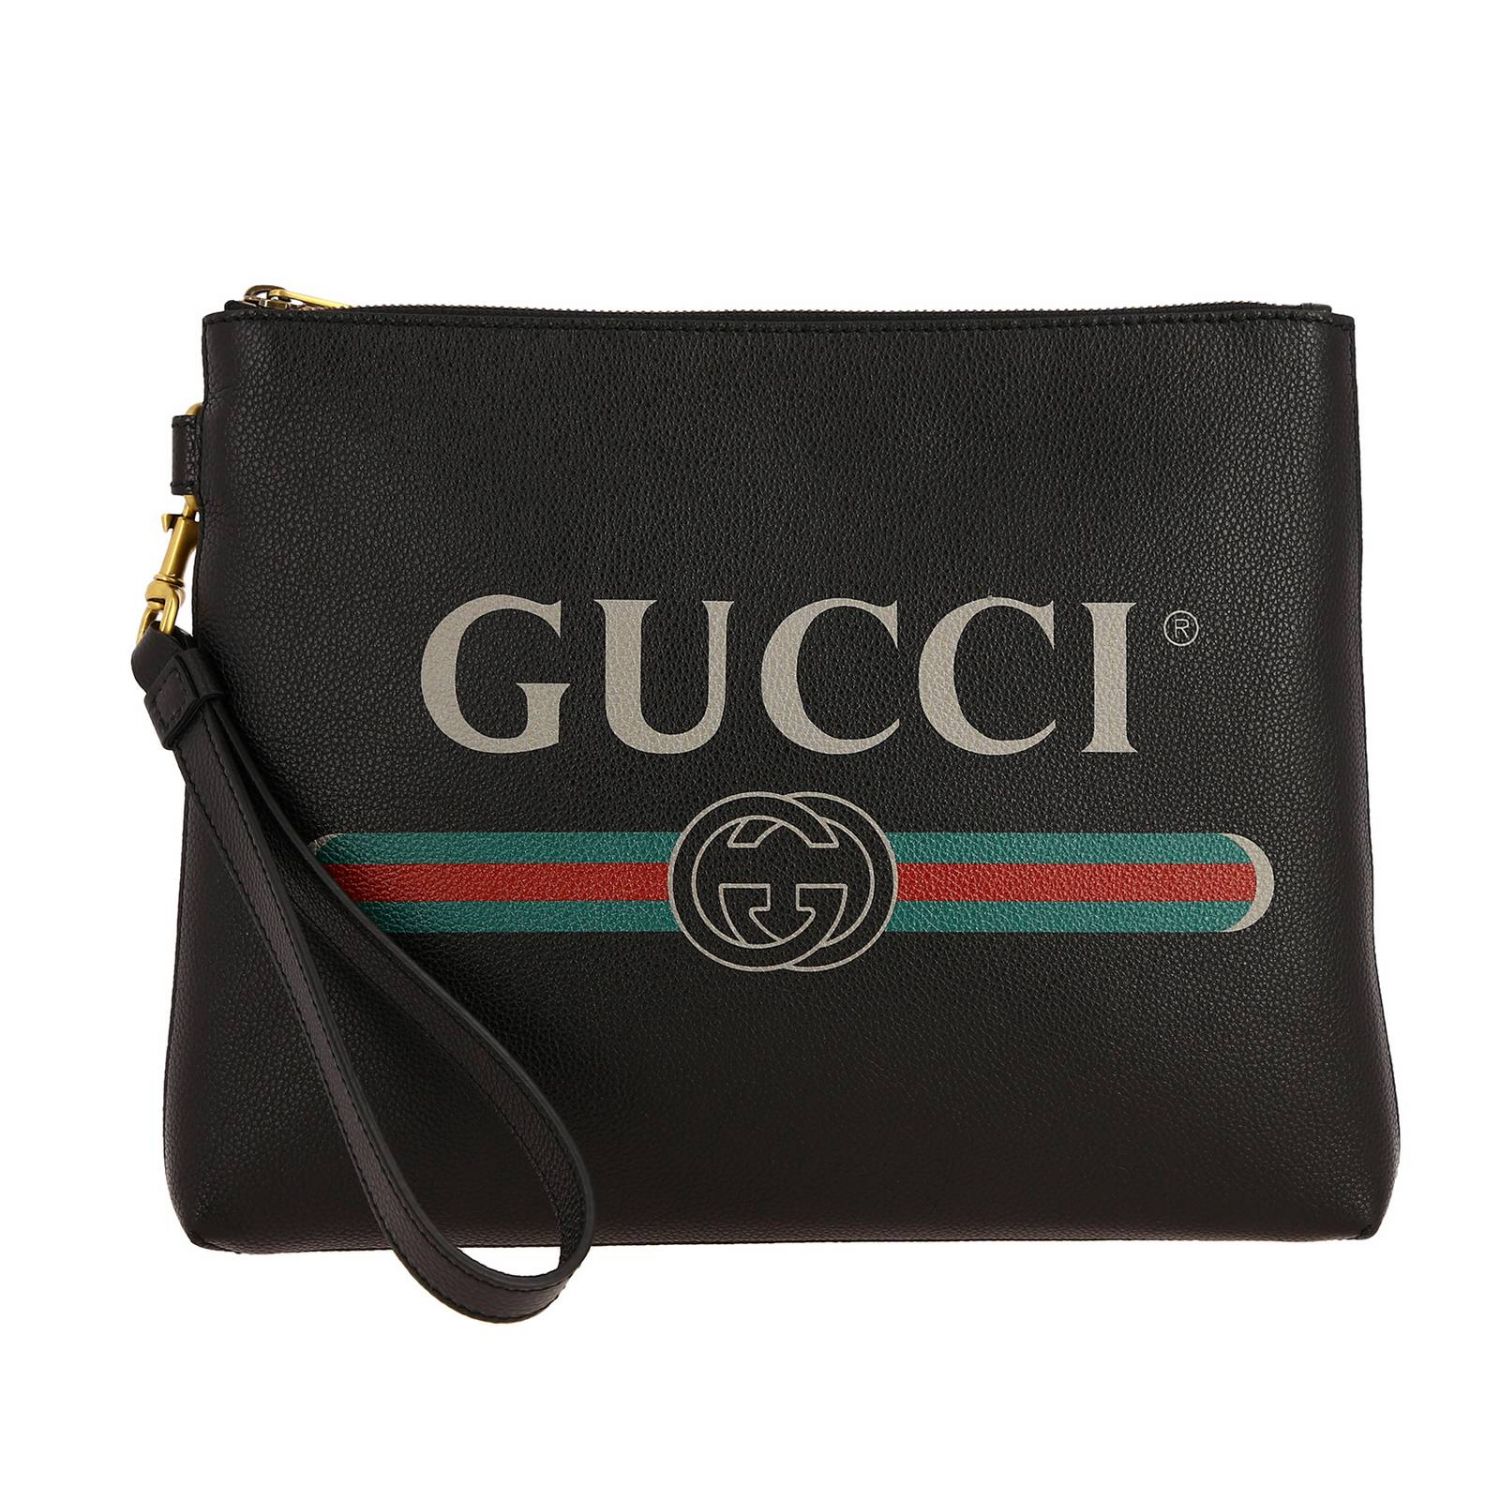 GUCCI: Medium print leather clutch bag with Classic print | Bags Gucci